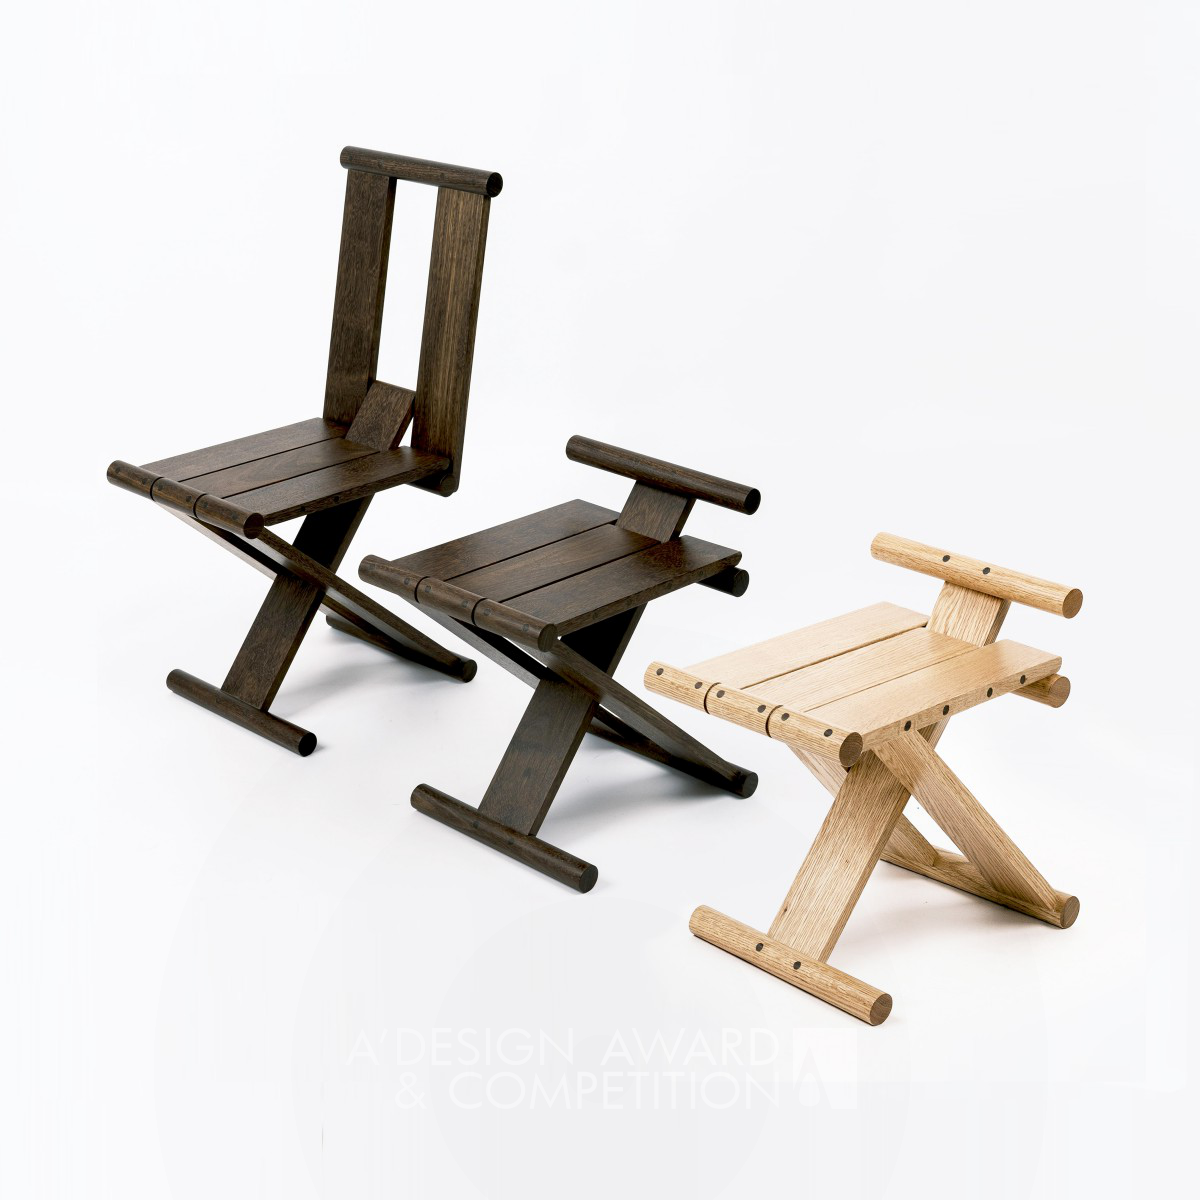 Golf Folding Chair by Miguel Arruda Bronze Furniture Design Award Winner 2024 